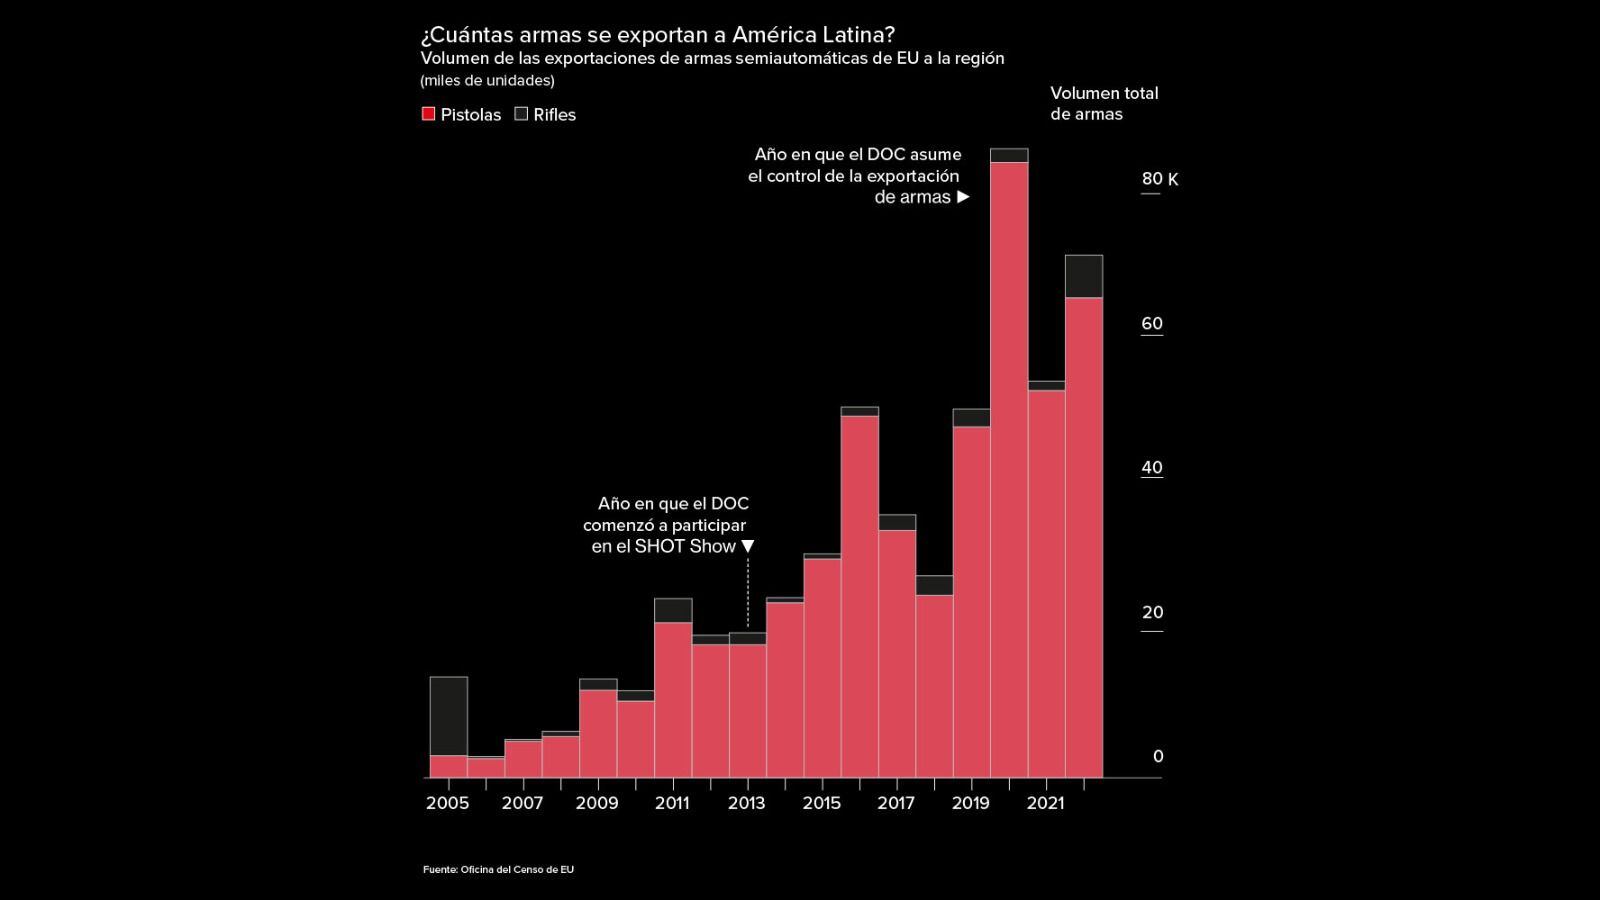 ¿Cuántas armas de EU a América Latina se exportan al año? 